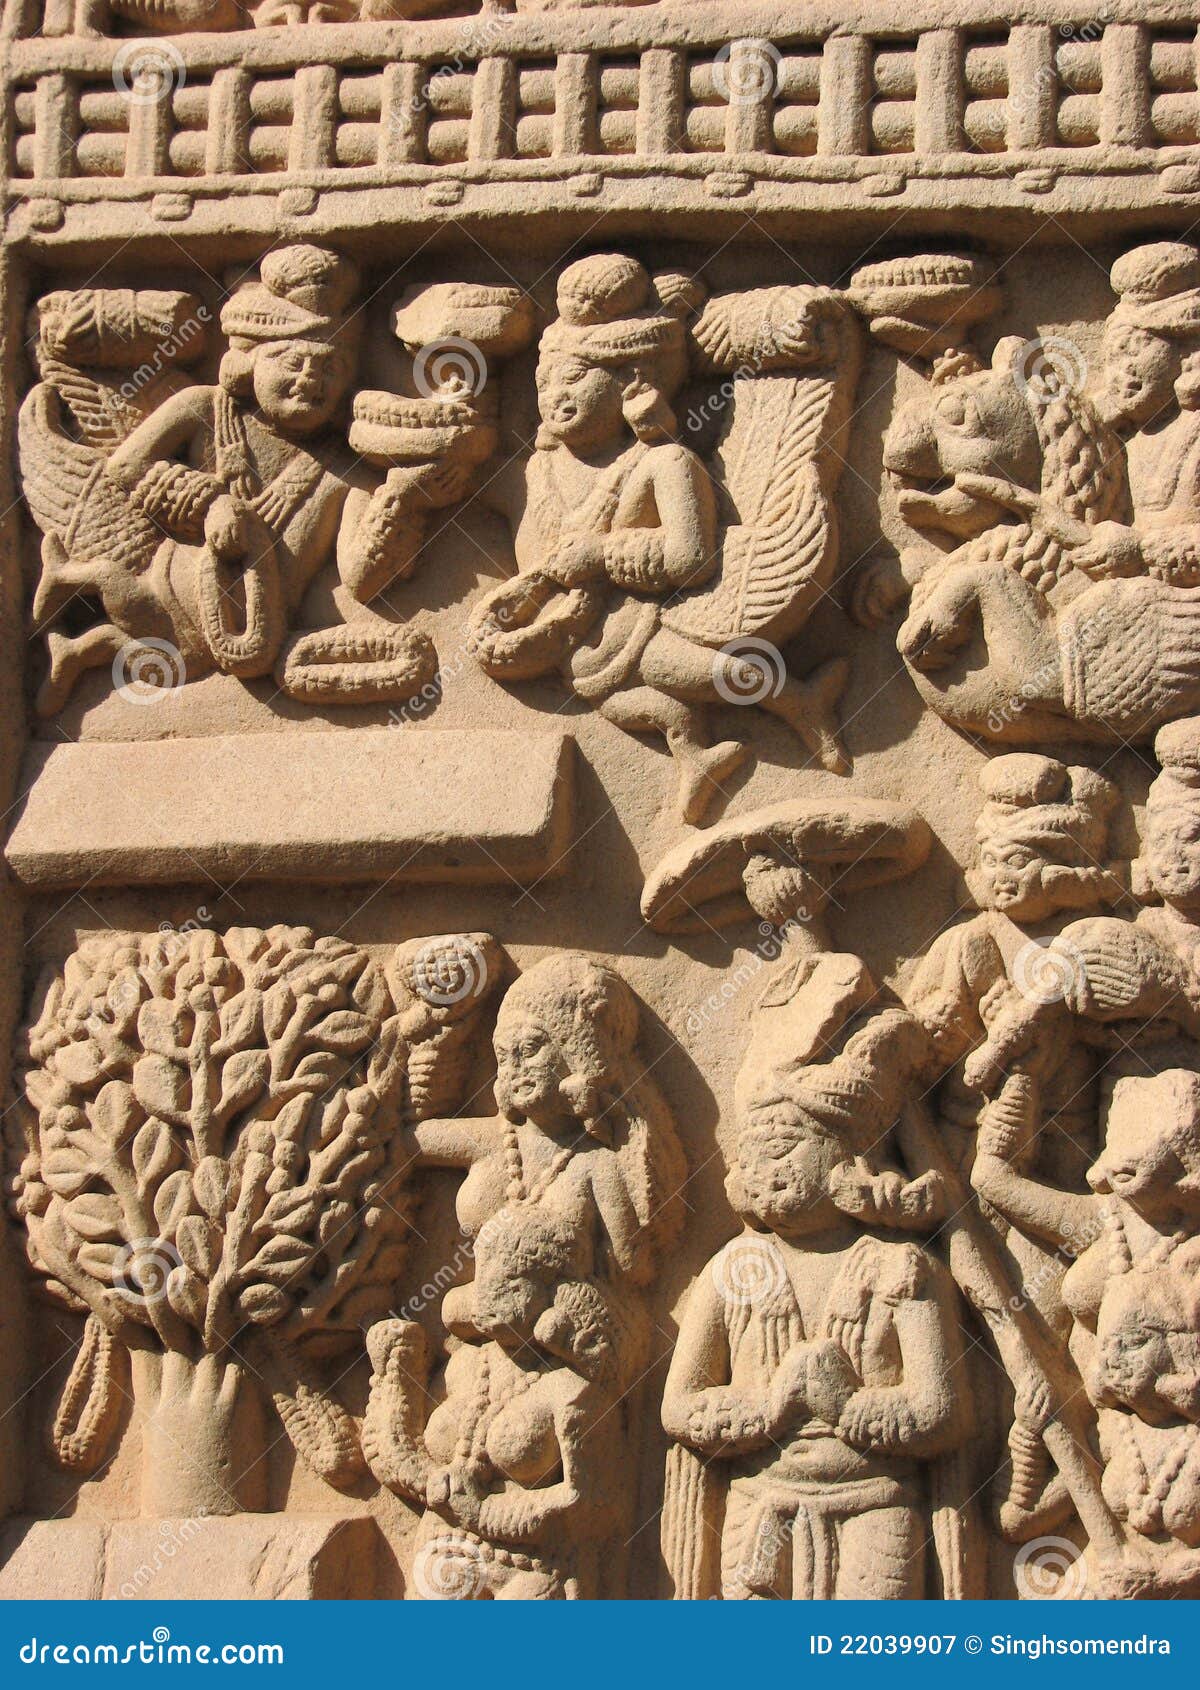 stone sculptures in sanchi, madhya pradesh